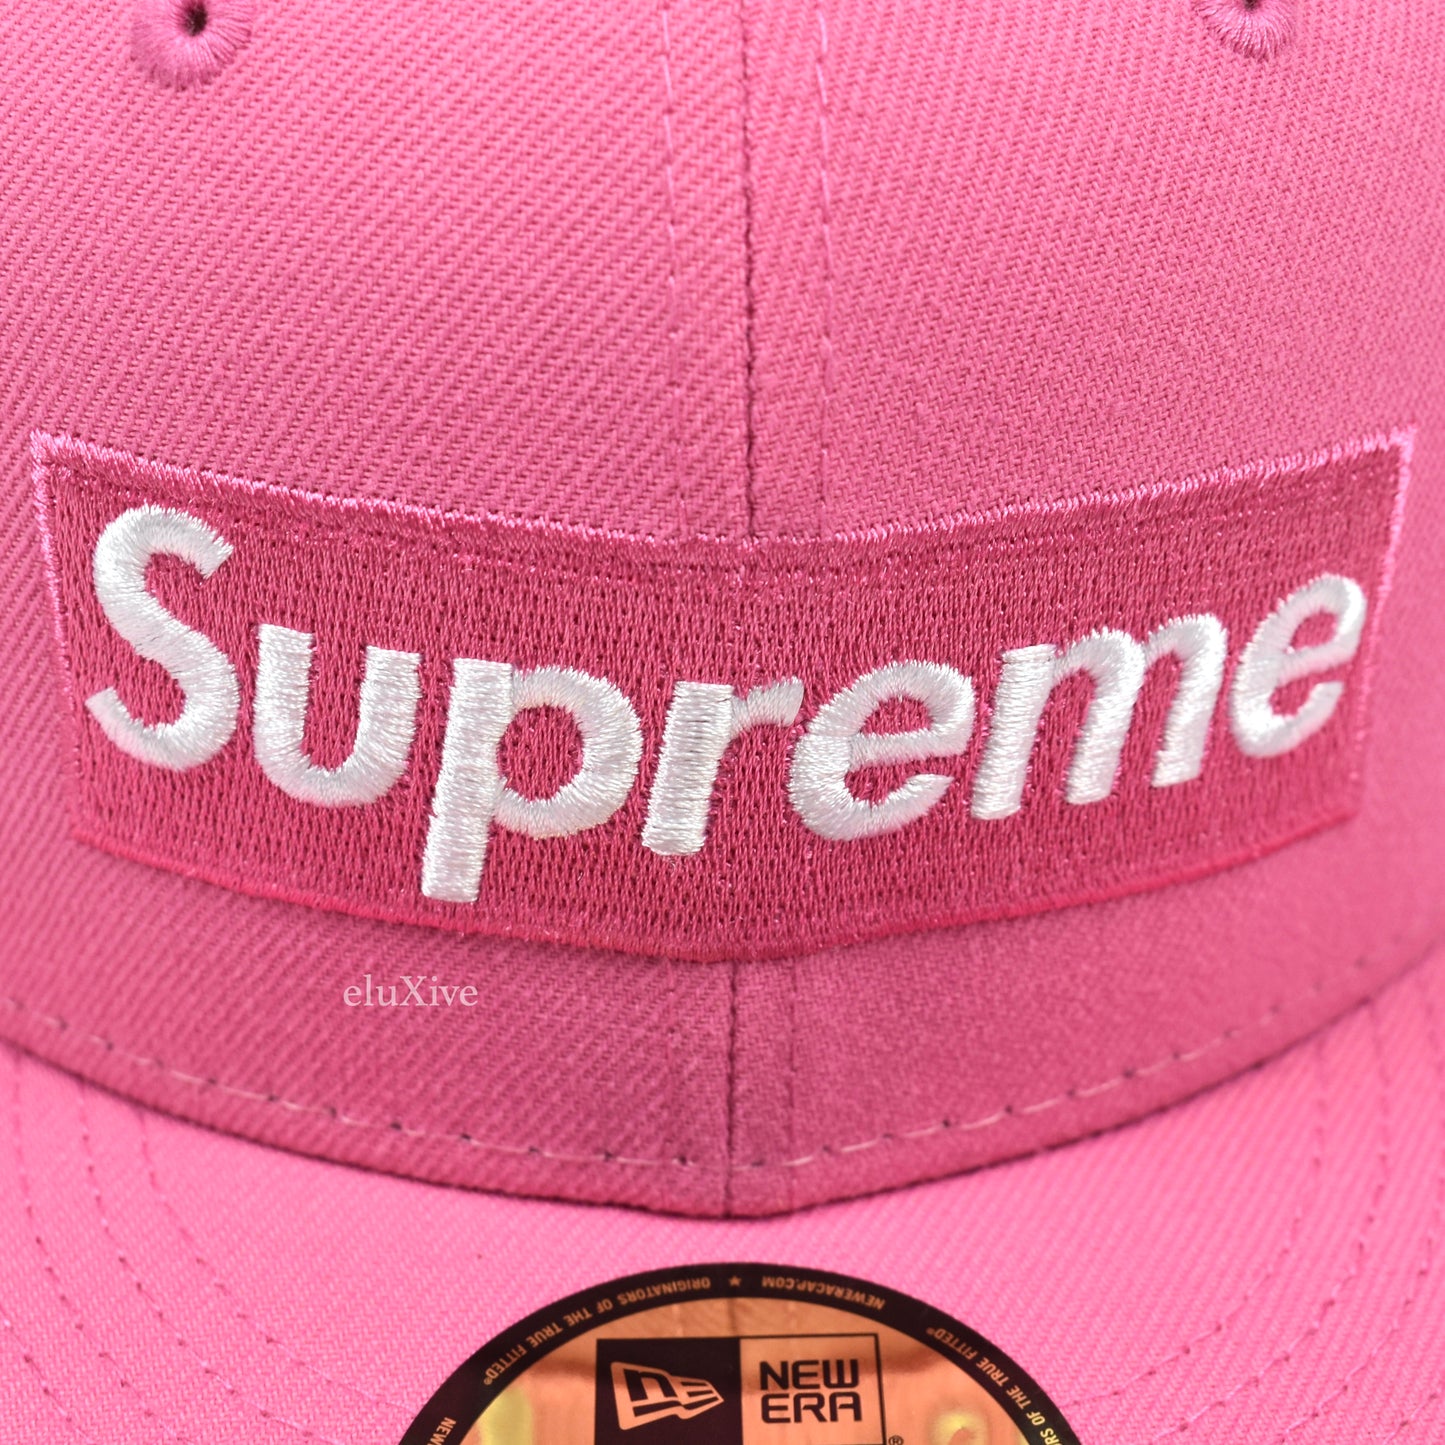 Supreme x New Era - Pink Box Logo Mesh Back Hat